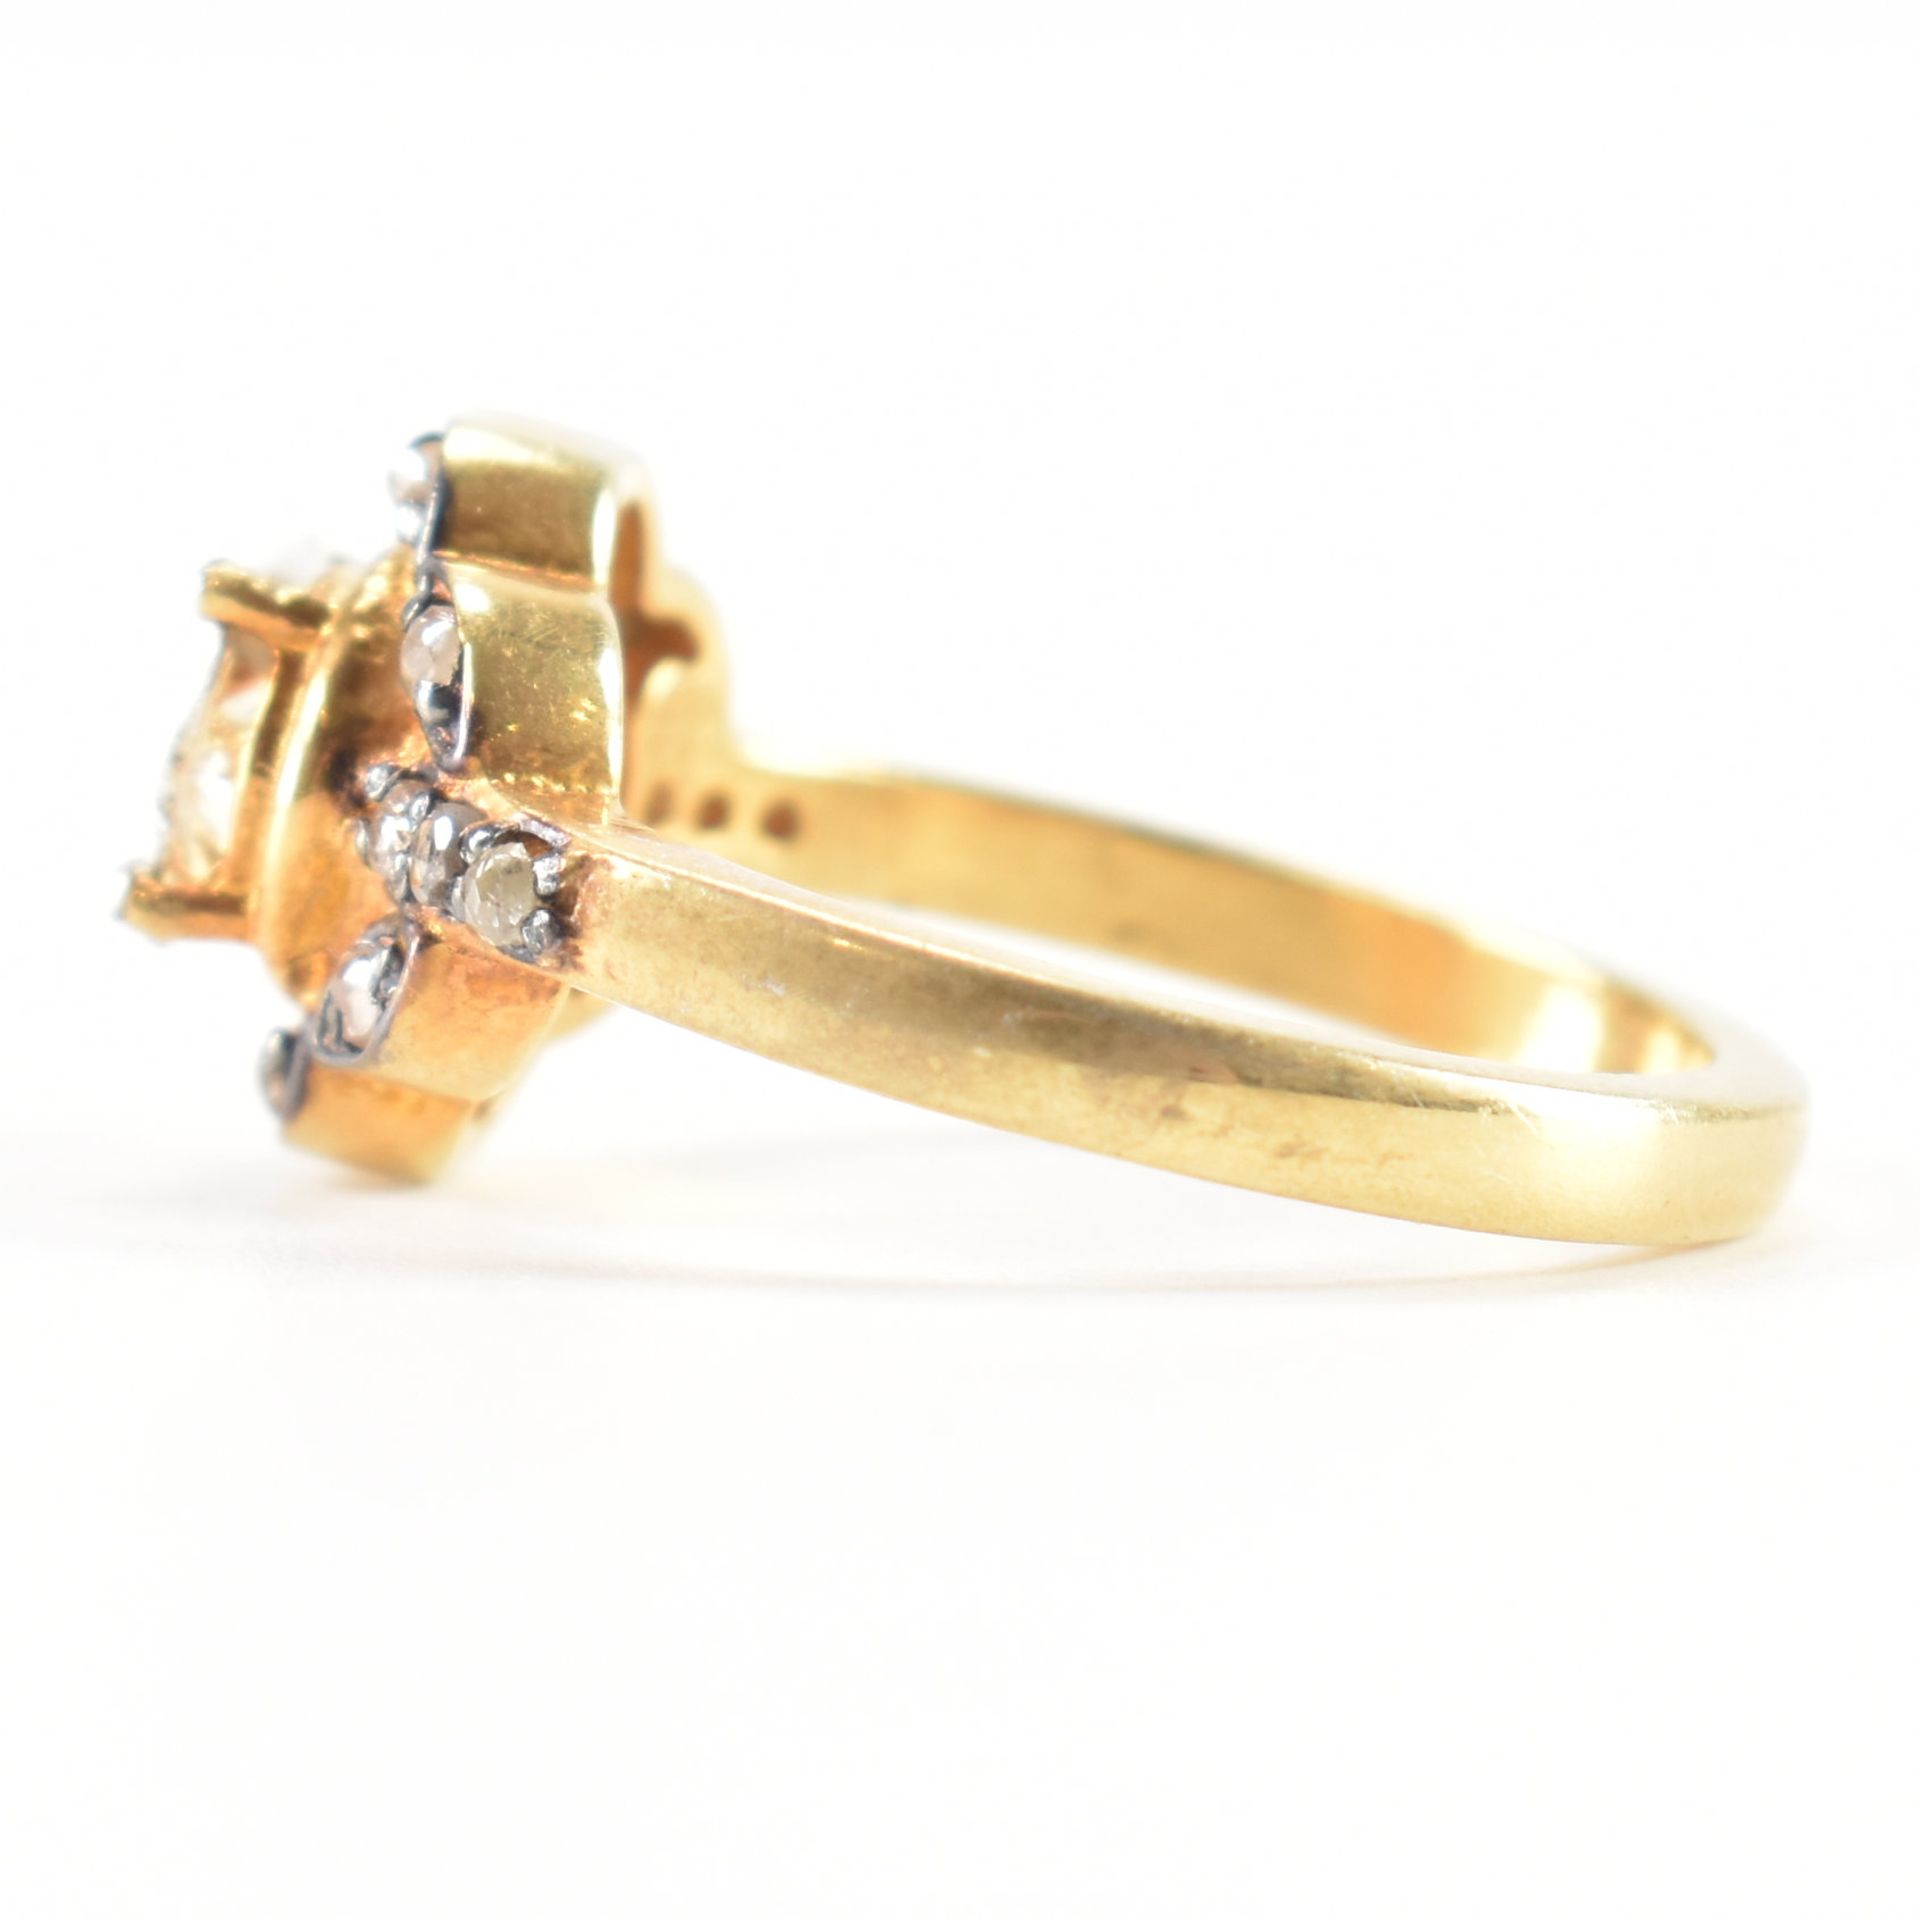 VINTAGE GOLD & ROUGH DIAMOND RING - Image 2 of 7